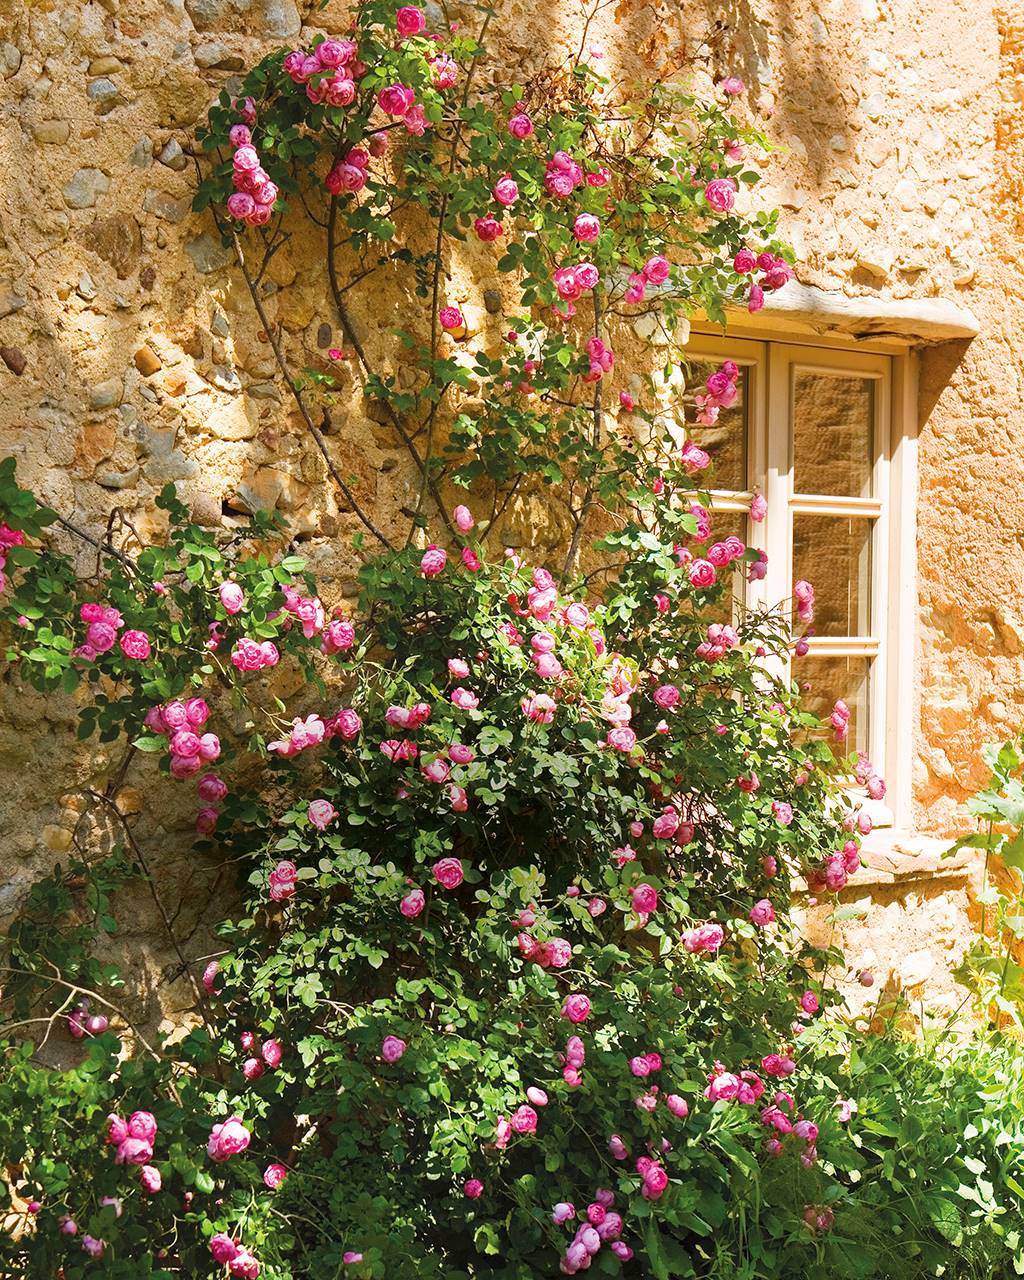 Detalle de rosal trepador en fachada rústica.